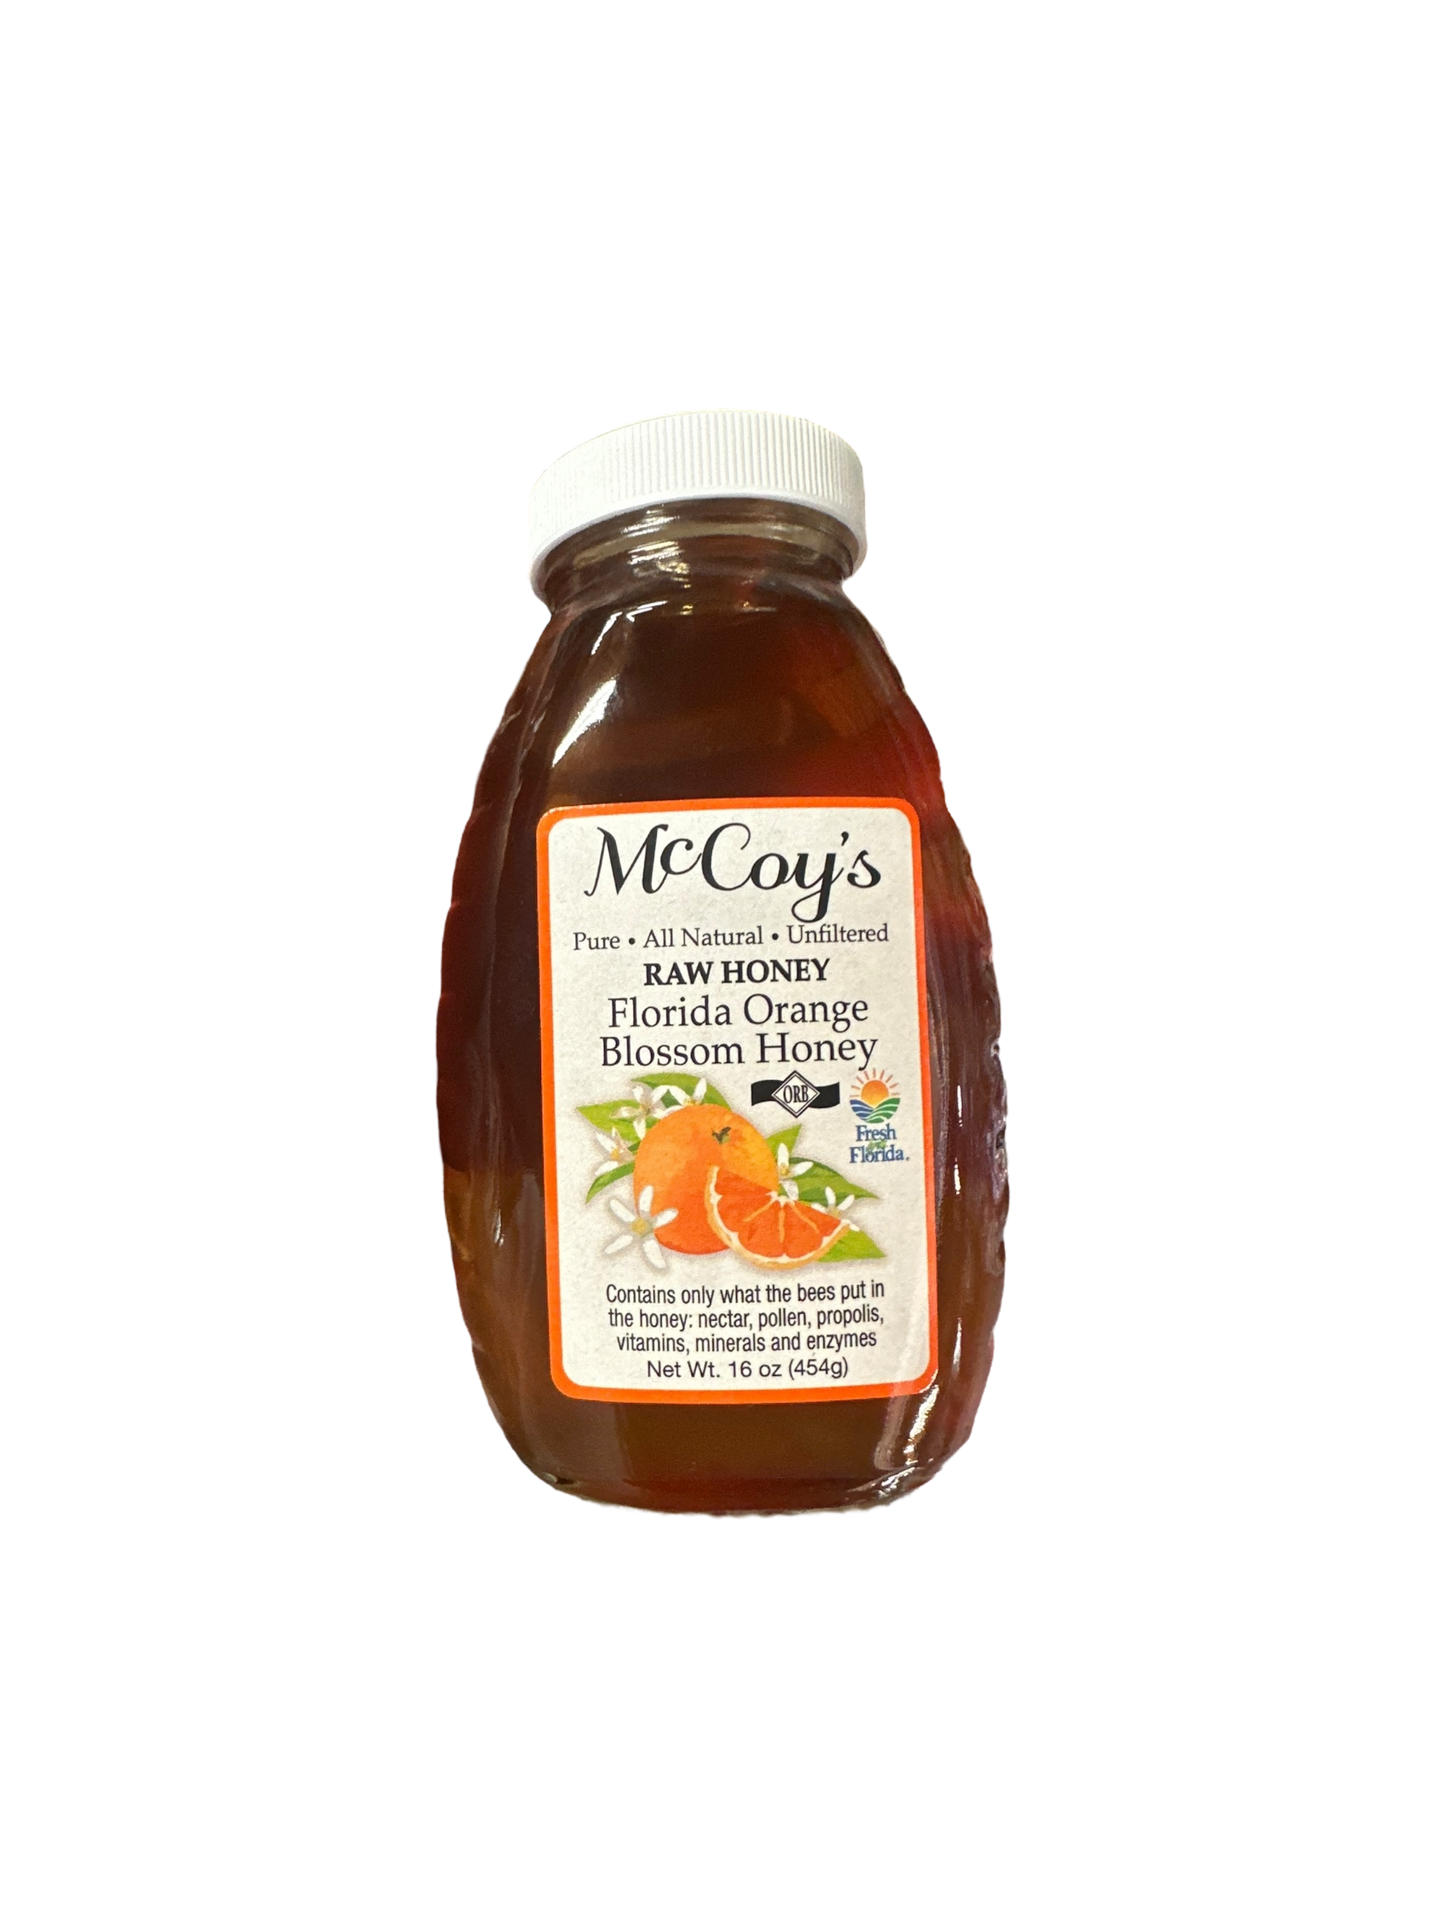 Florida Orange Blossom Honey 16 oz. - McCoy’s Raw Honey